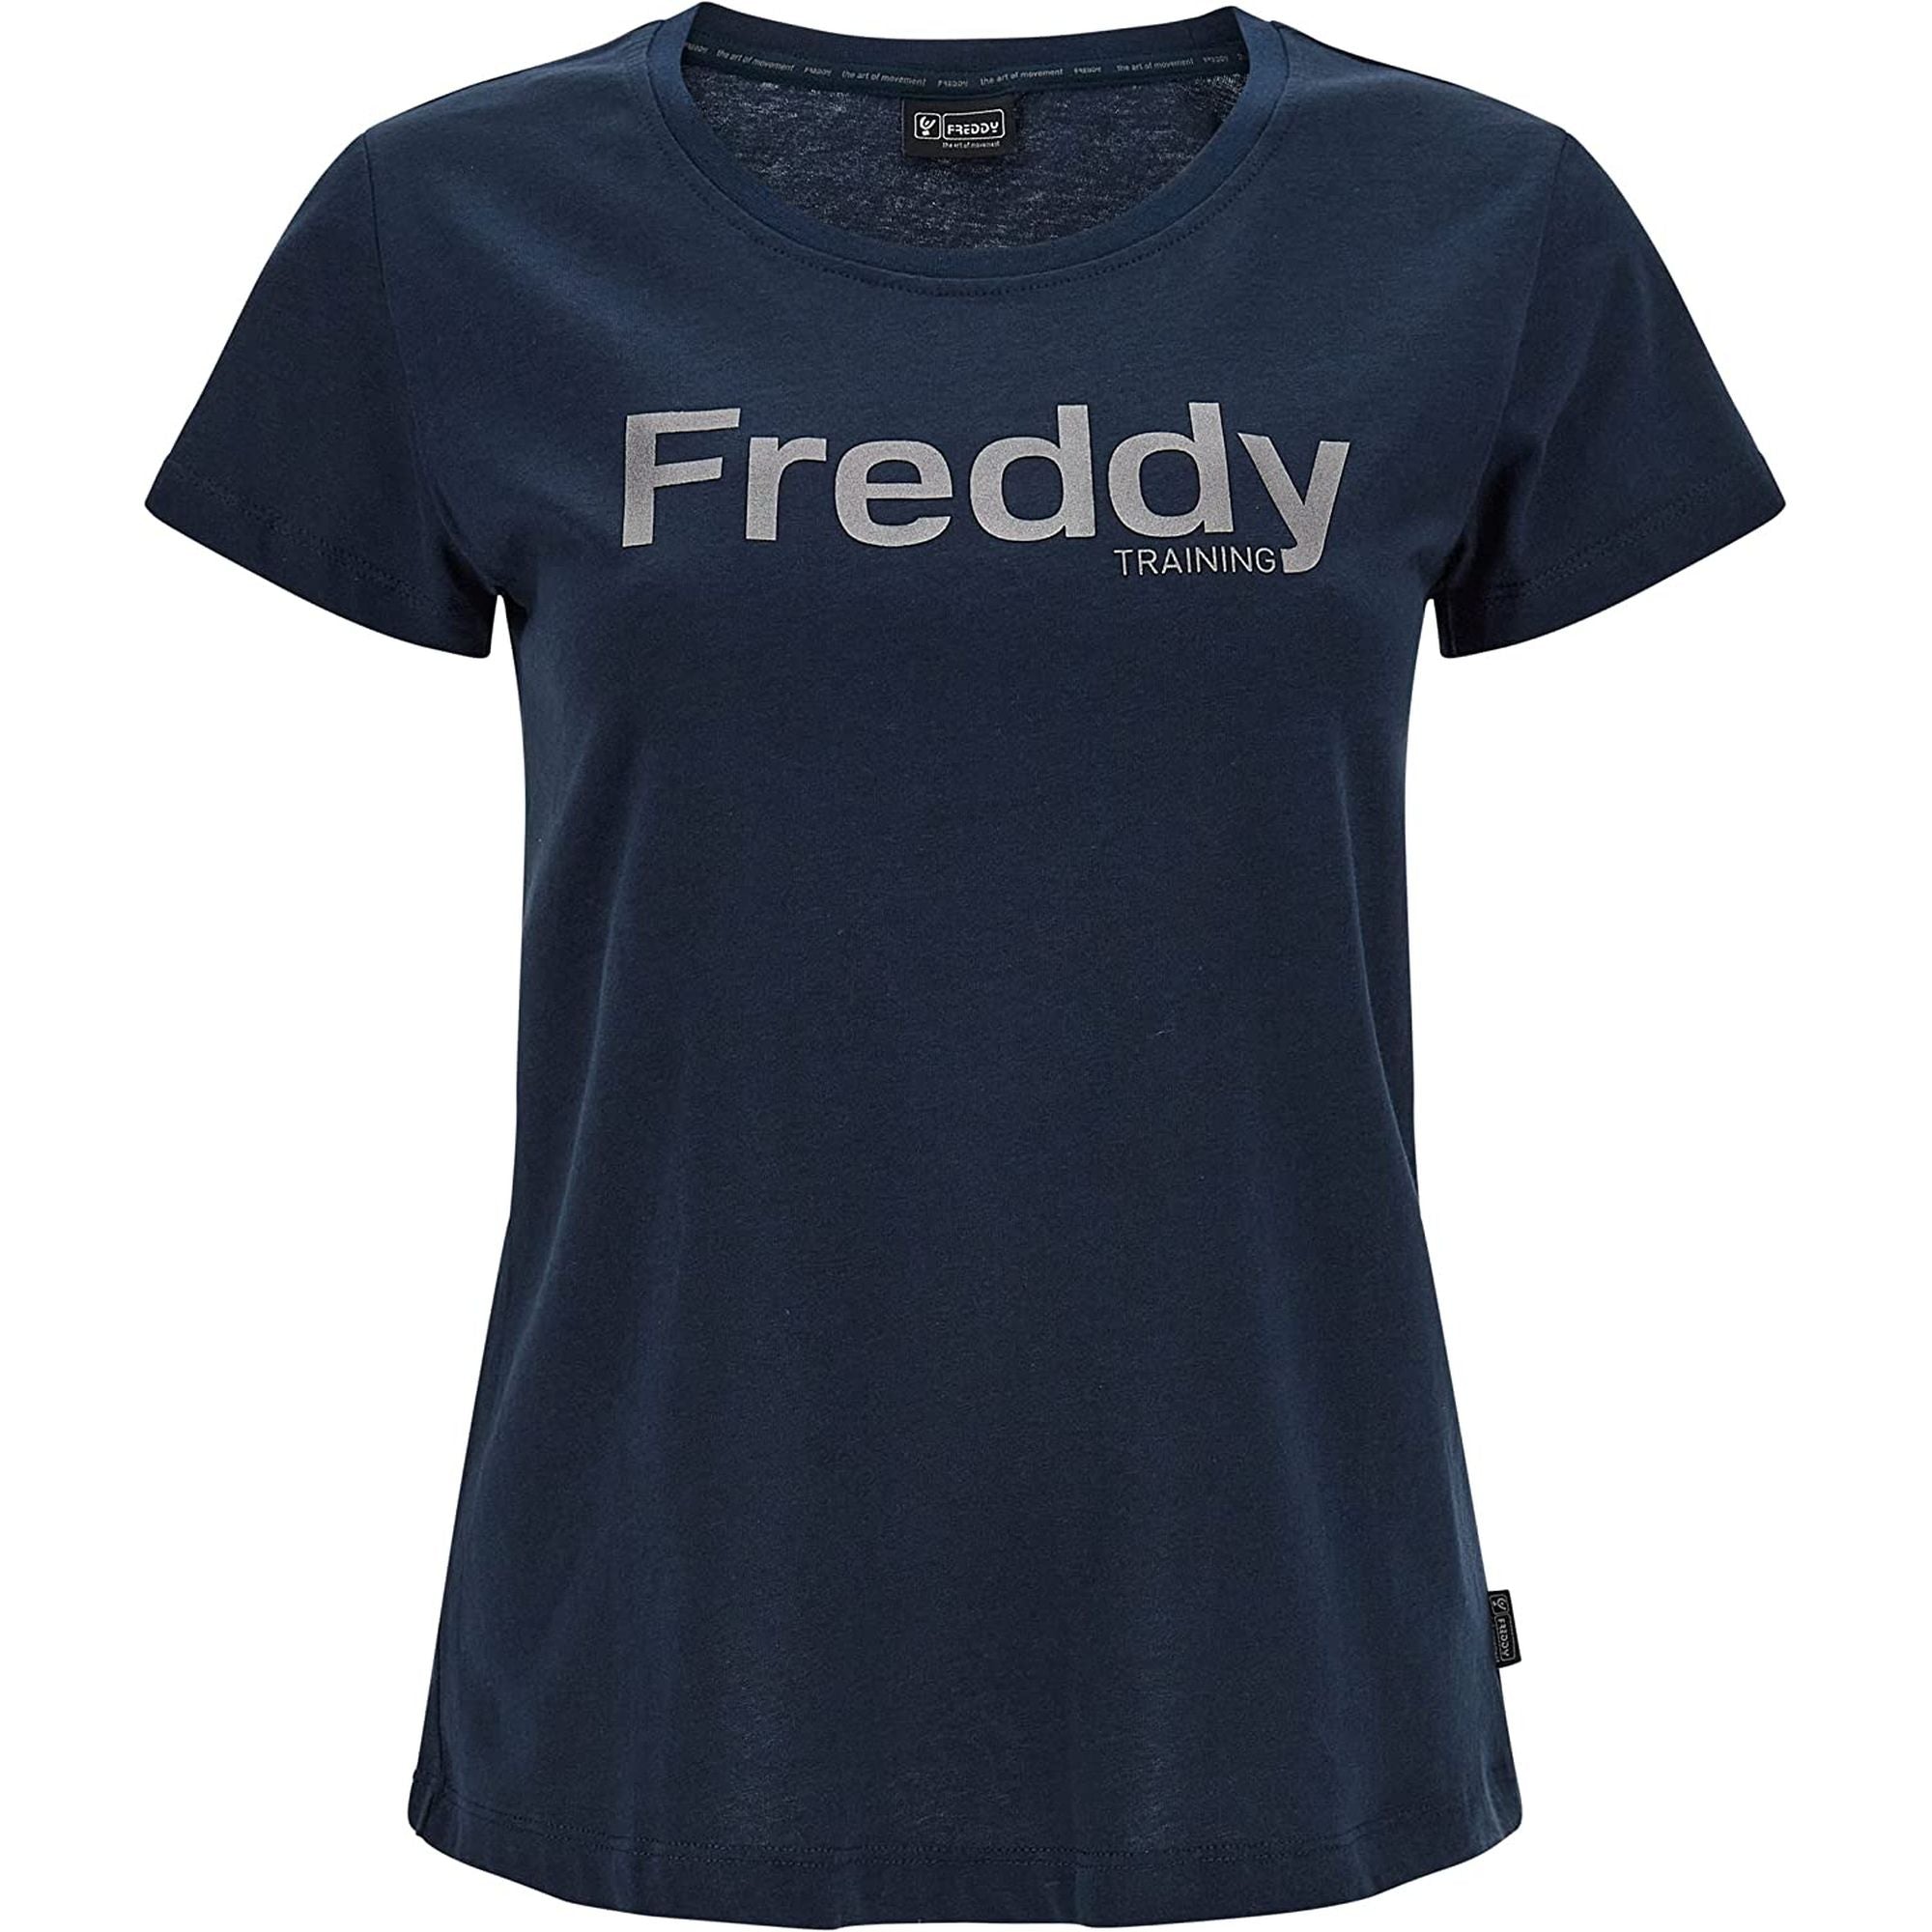 T-shirt Sportiva FREDDY Donna MC Blu